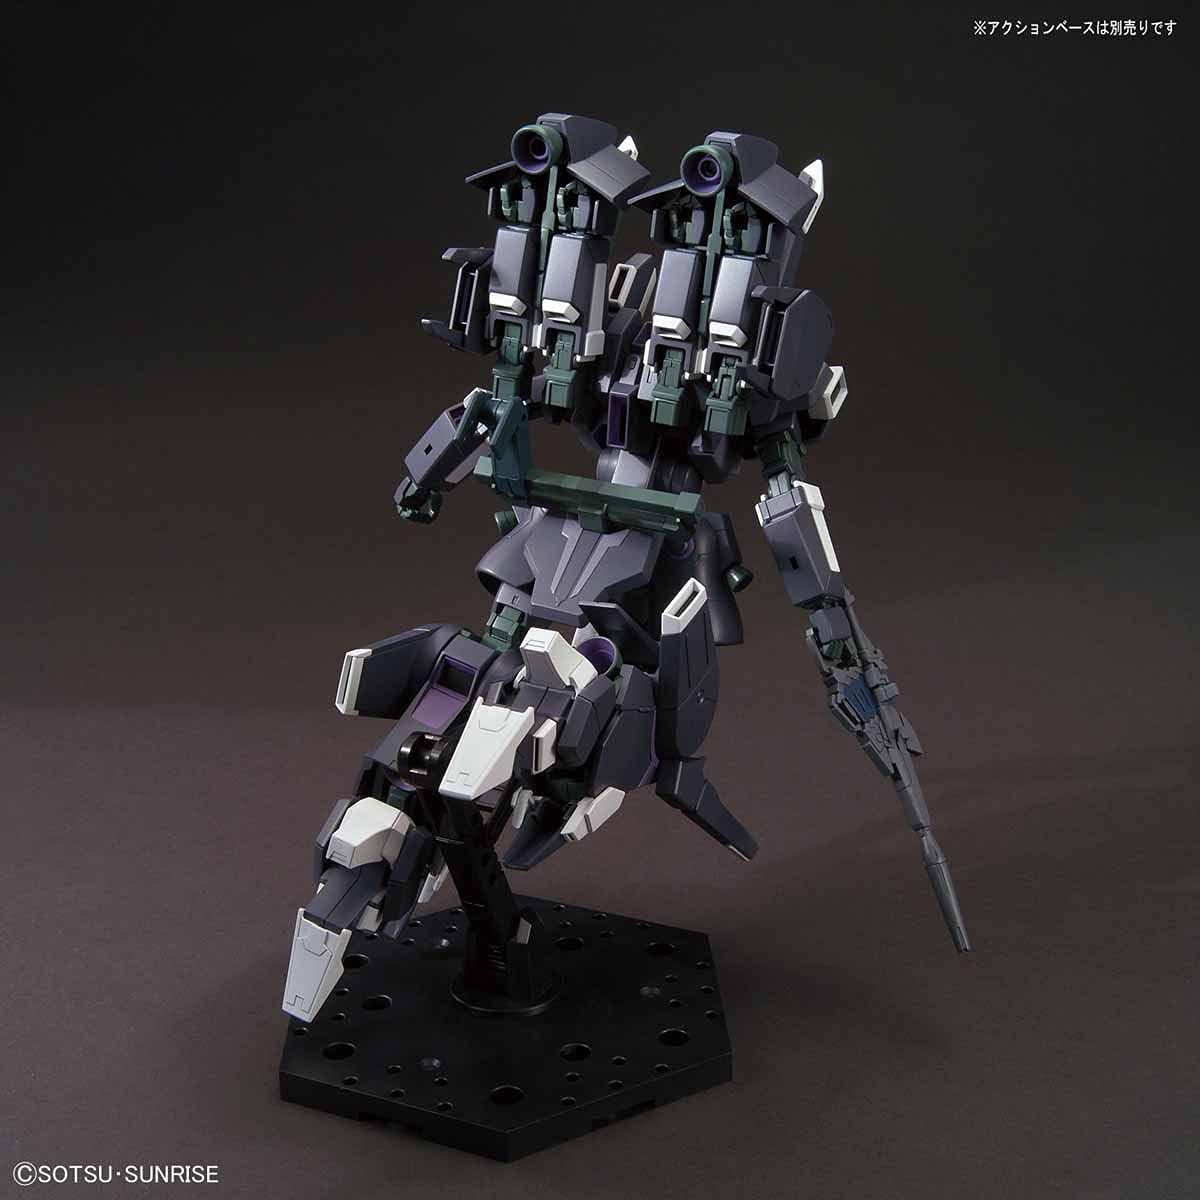 1/144 HGUC "Mobile Suit Gundam Narrative" Silver Bullet Suppressor | animota